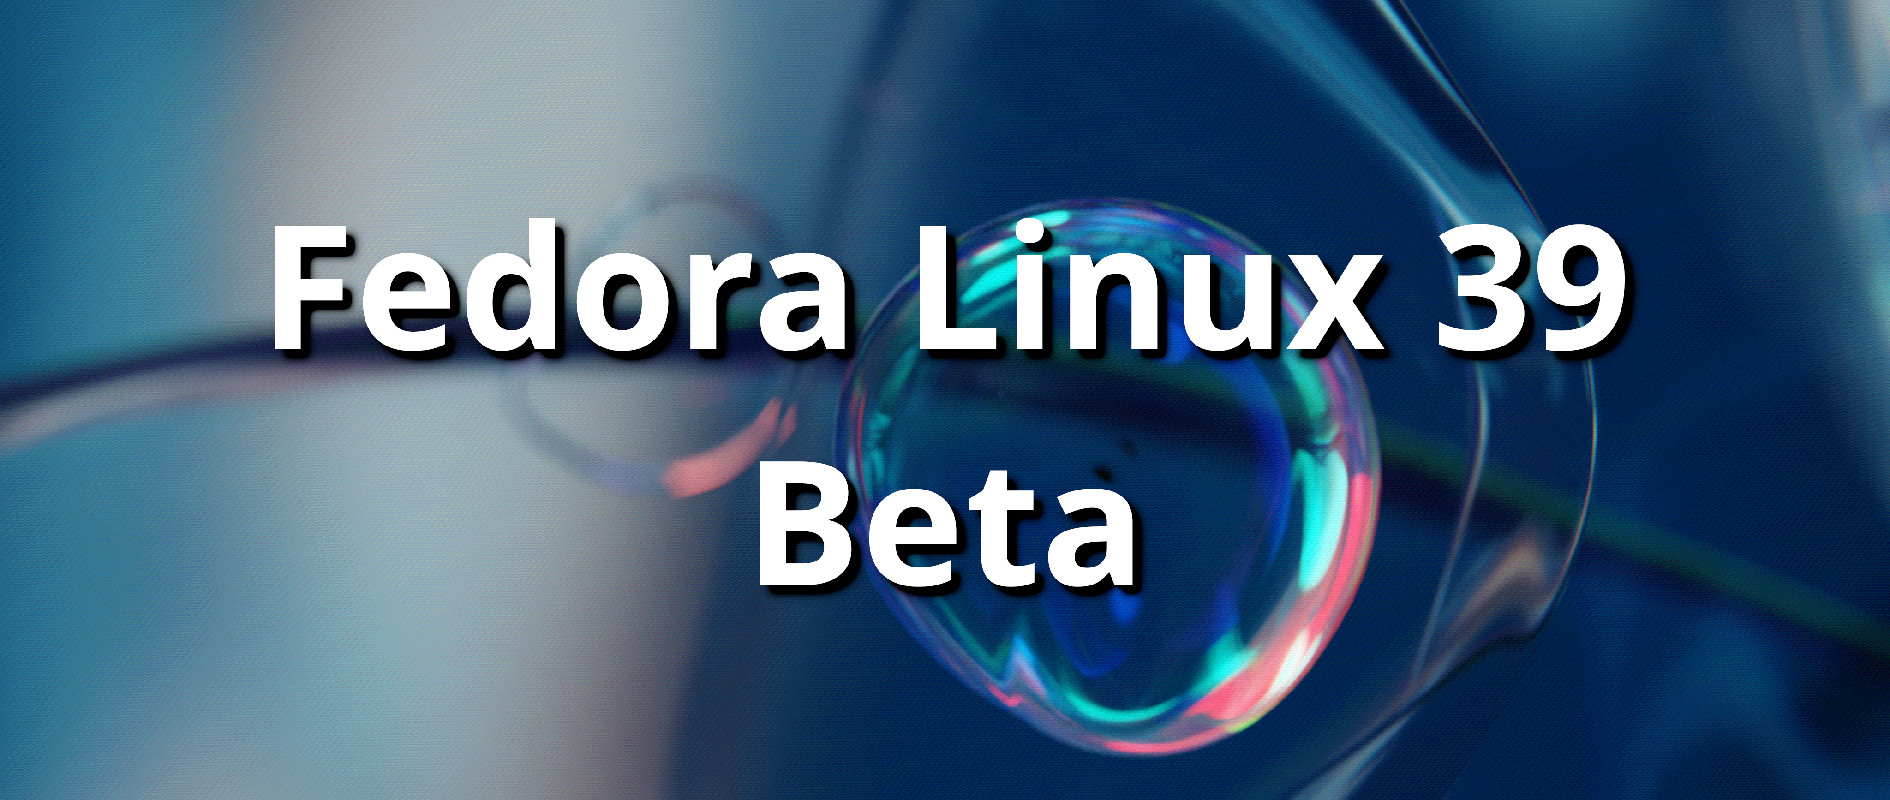 Announcing Fedora Linux 39 Beta - Fedora Magazine